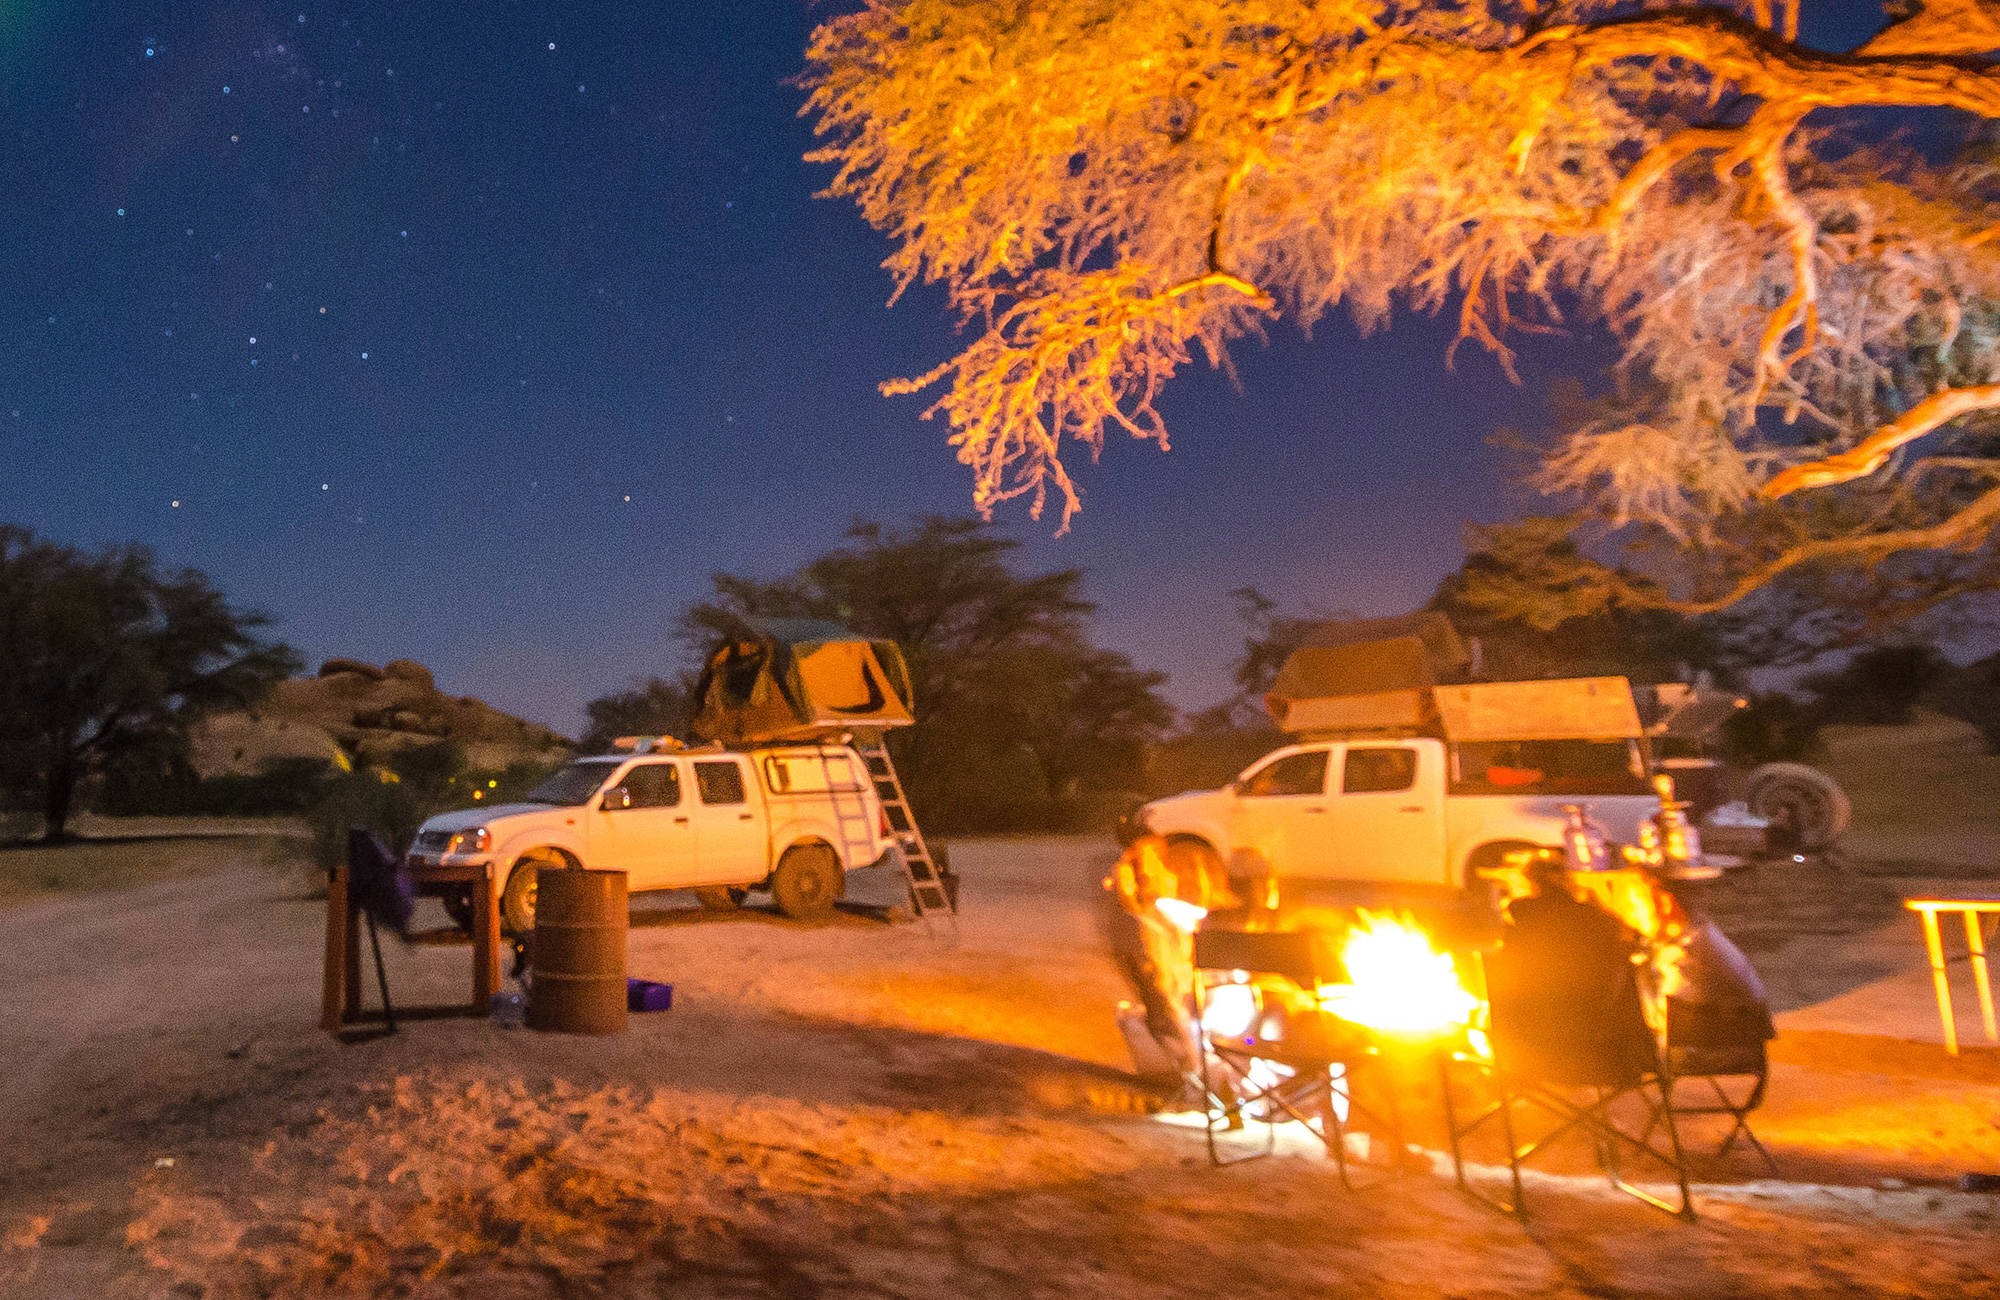 namibia-campervan-night-camp-bonfire-under-trees